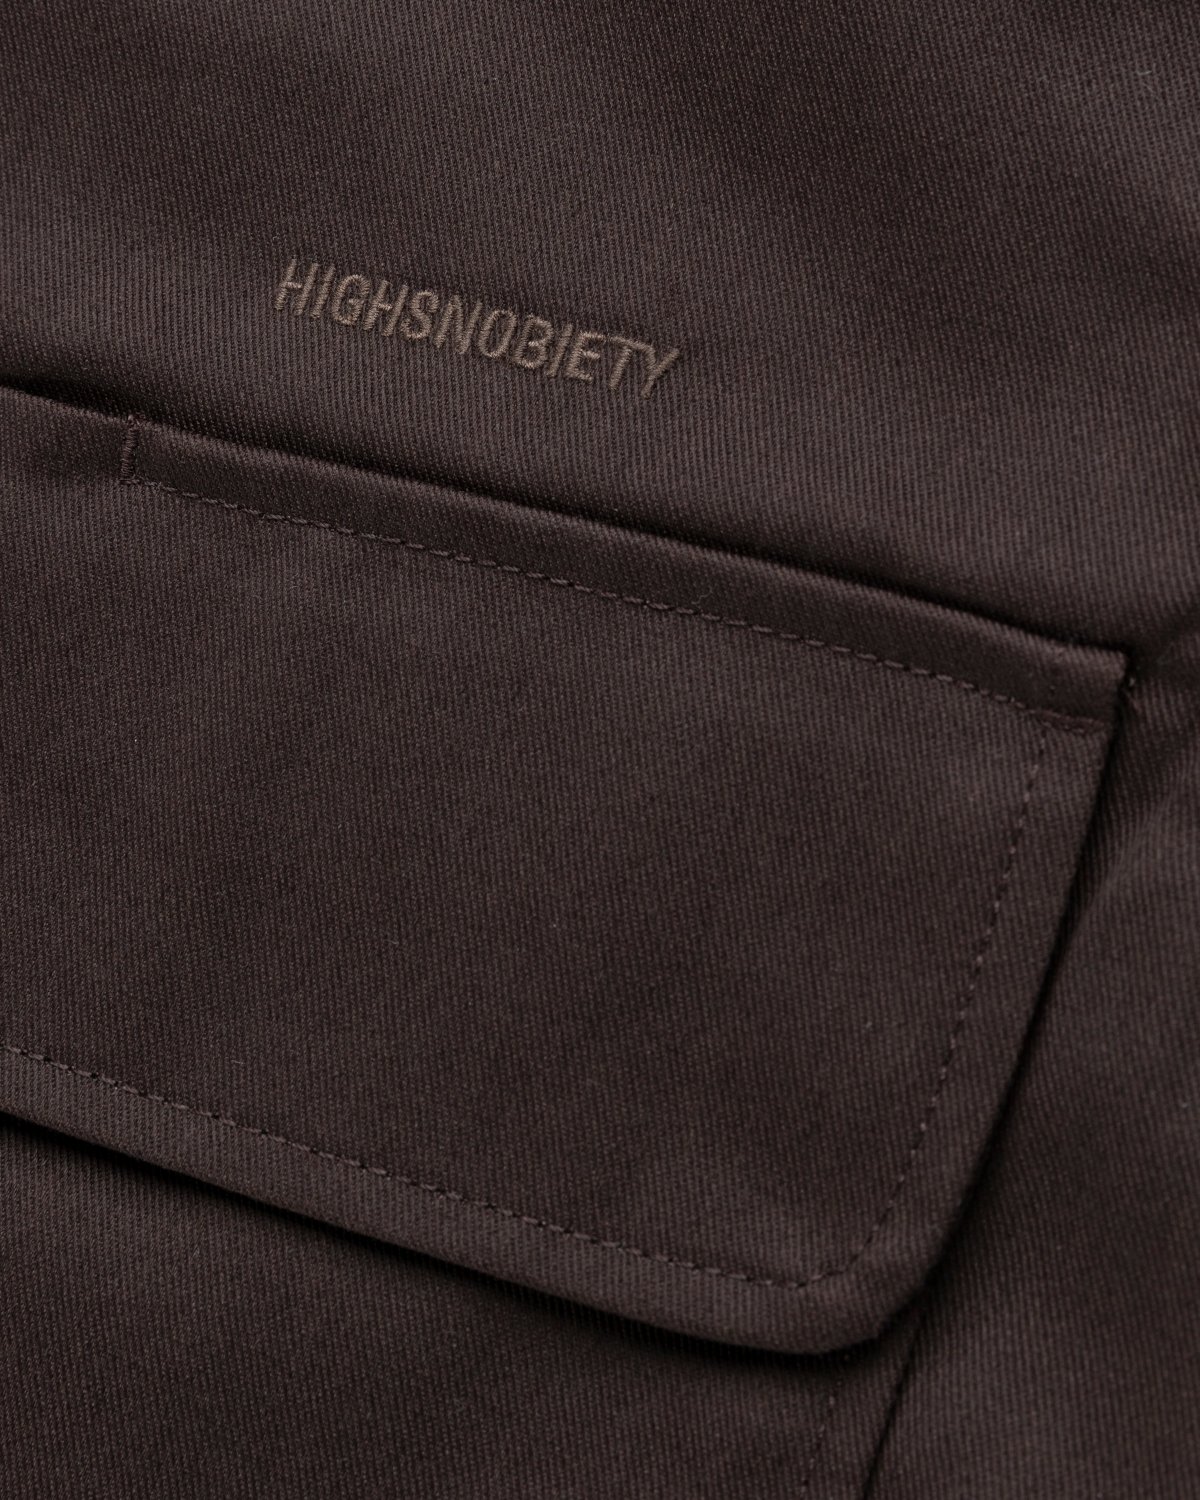 Highsnobiety x Dickies - Service Shirt Dark Brown - Clothing - Brown - Image 4